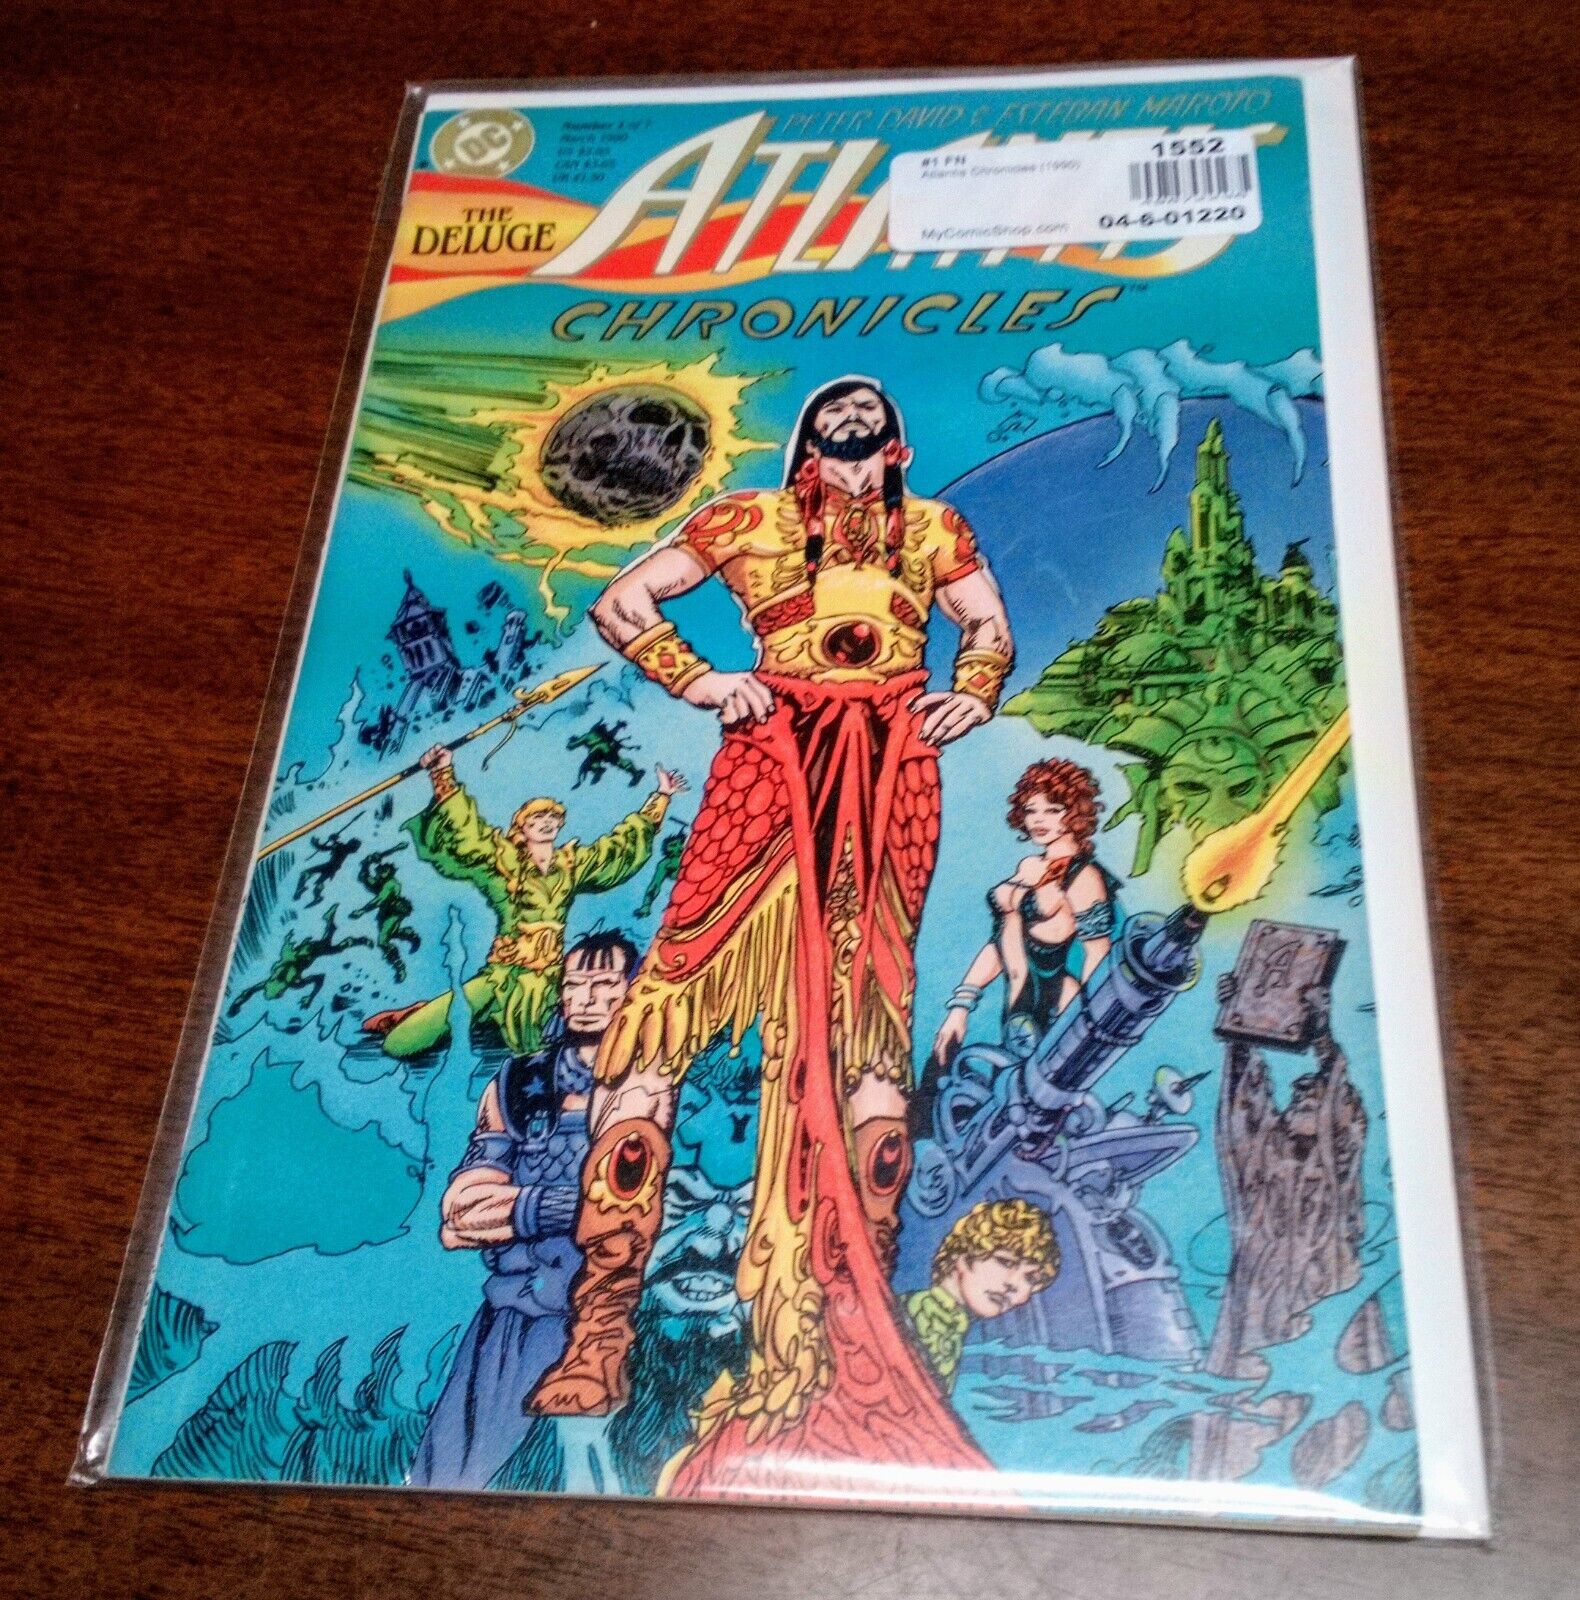 DC Comics Atlantis Chronicles #1 The Deluge March 1990 Comic Book